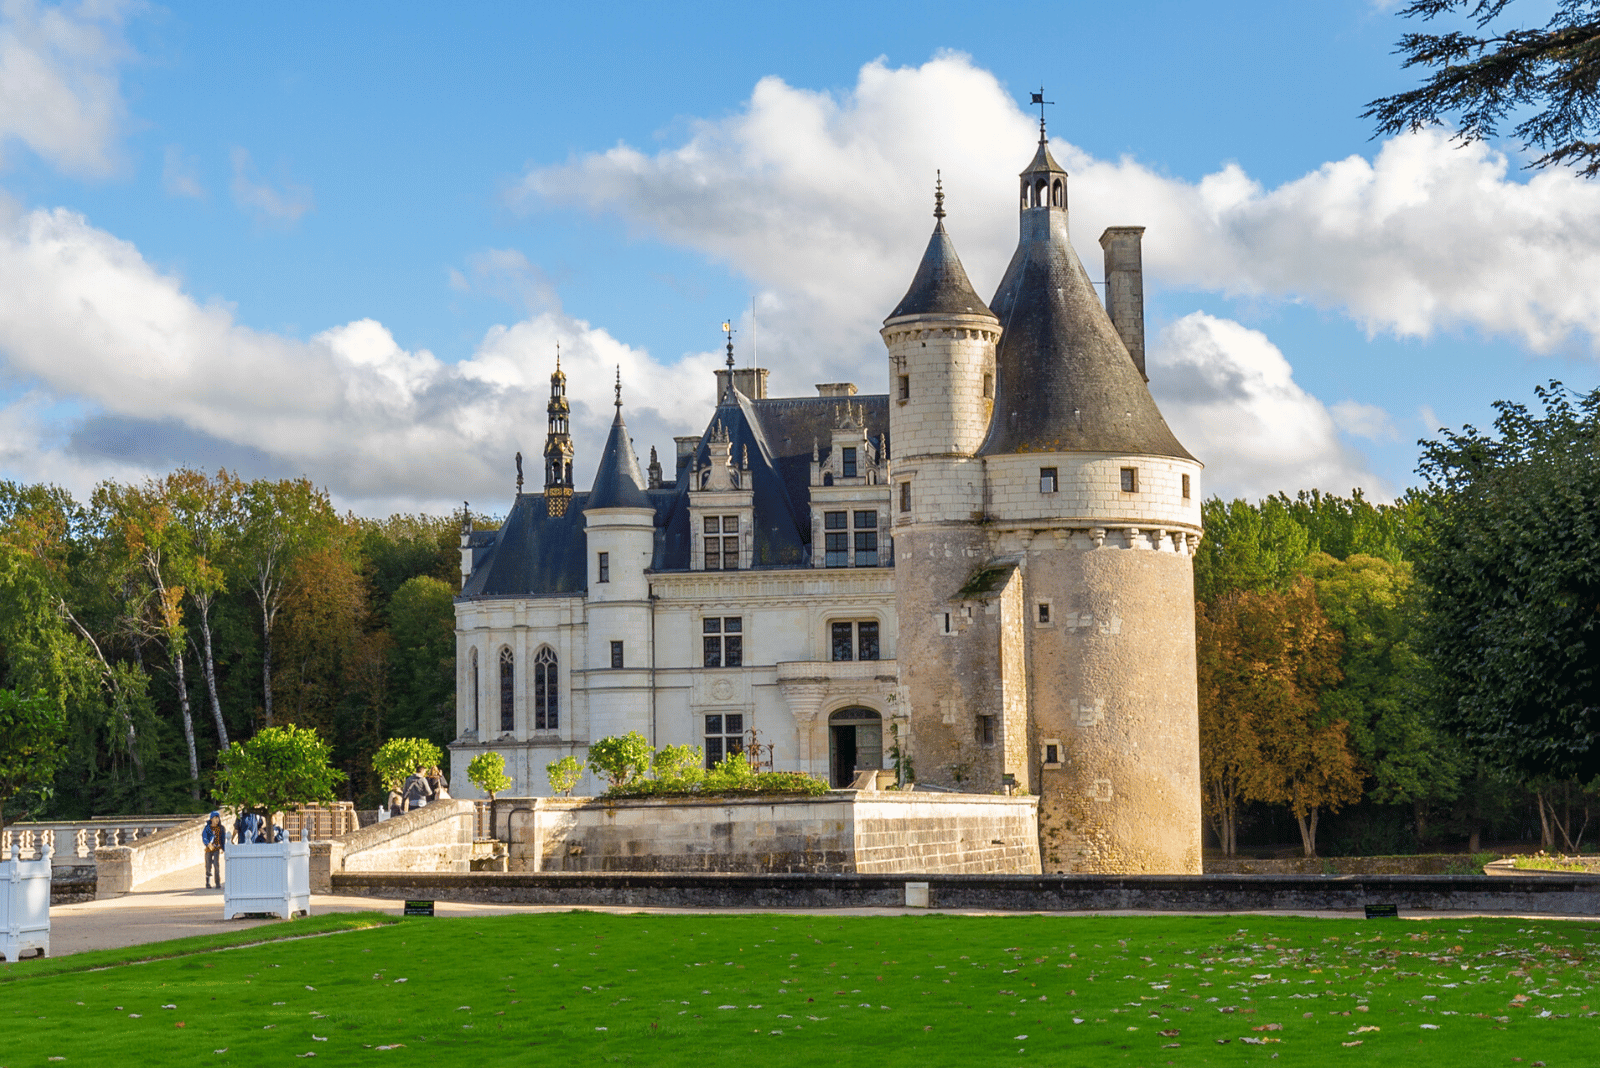 Cheateau de Chenonceau in the Loire Valley, France